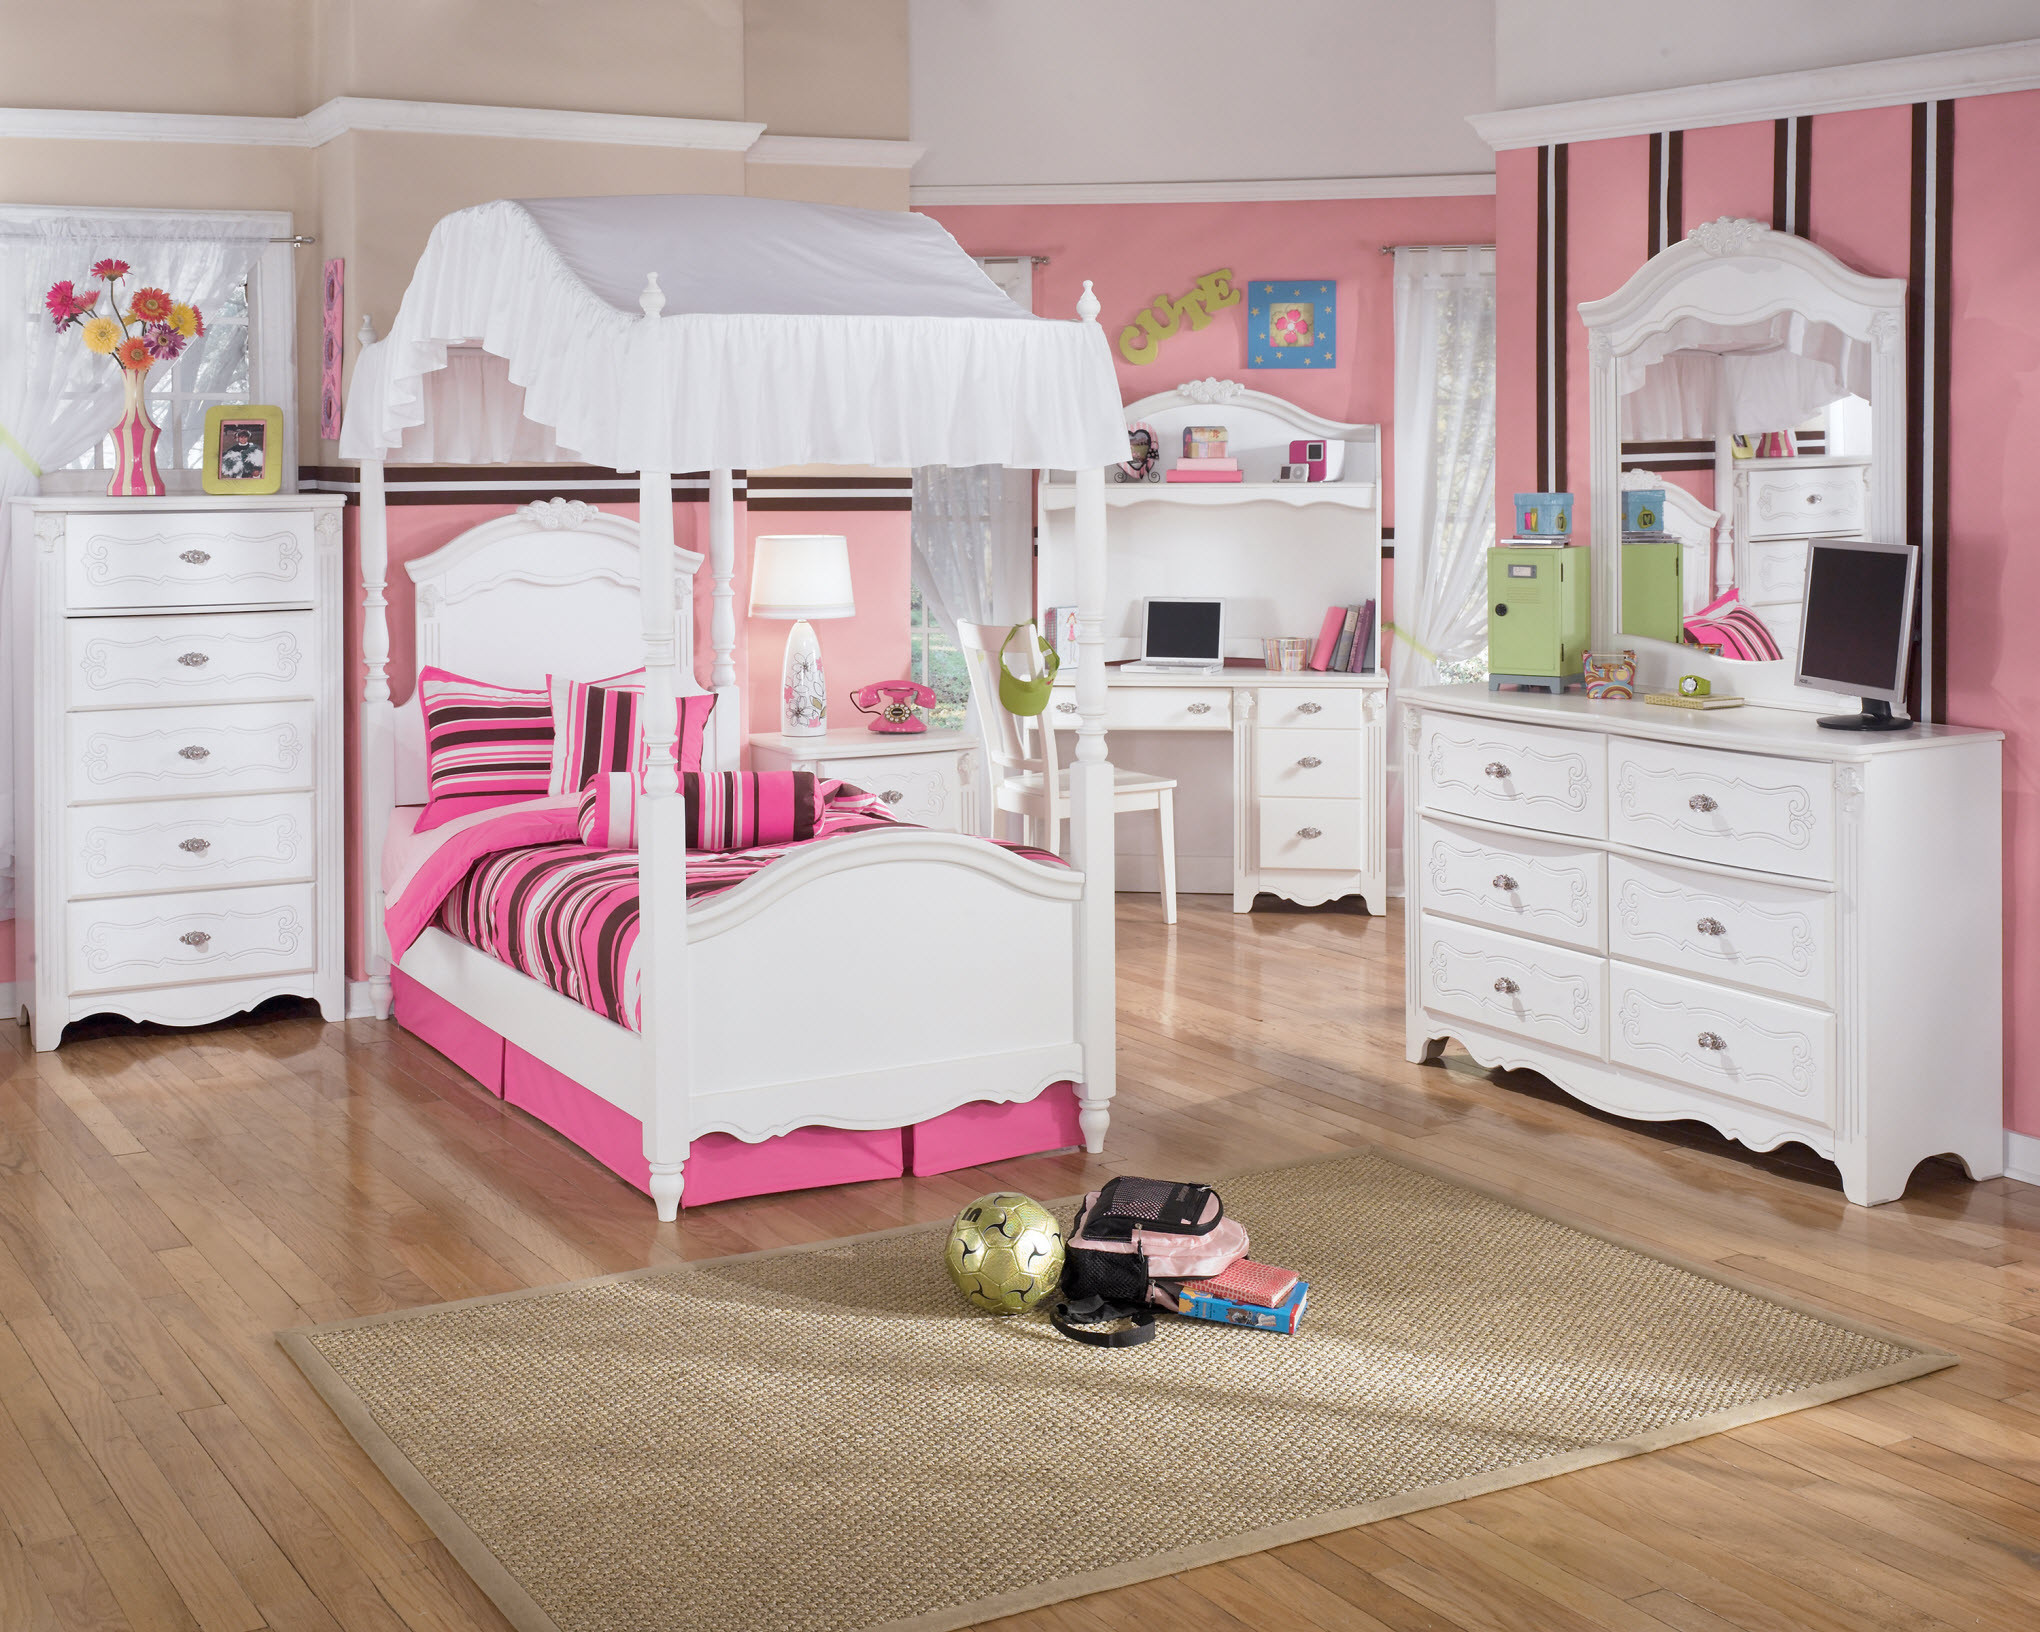 Bedroom Sets For Kids
 25 Romantic and Modern Ideas for Girls Bedroom Sets